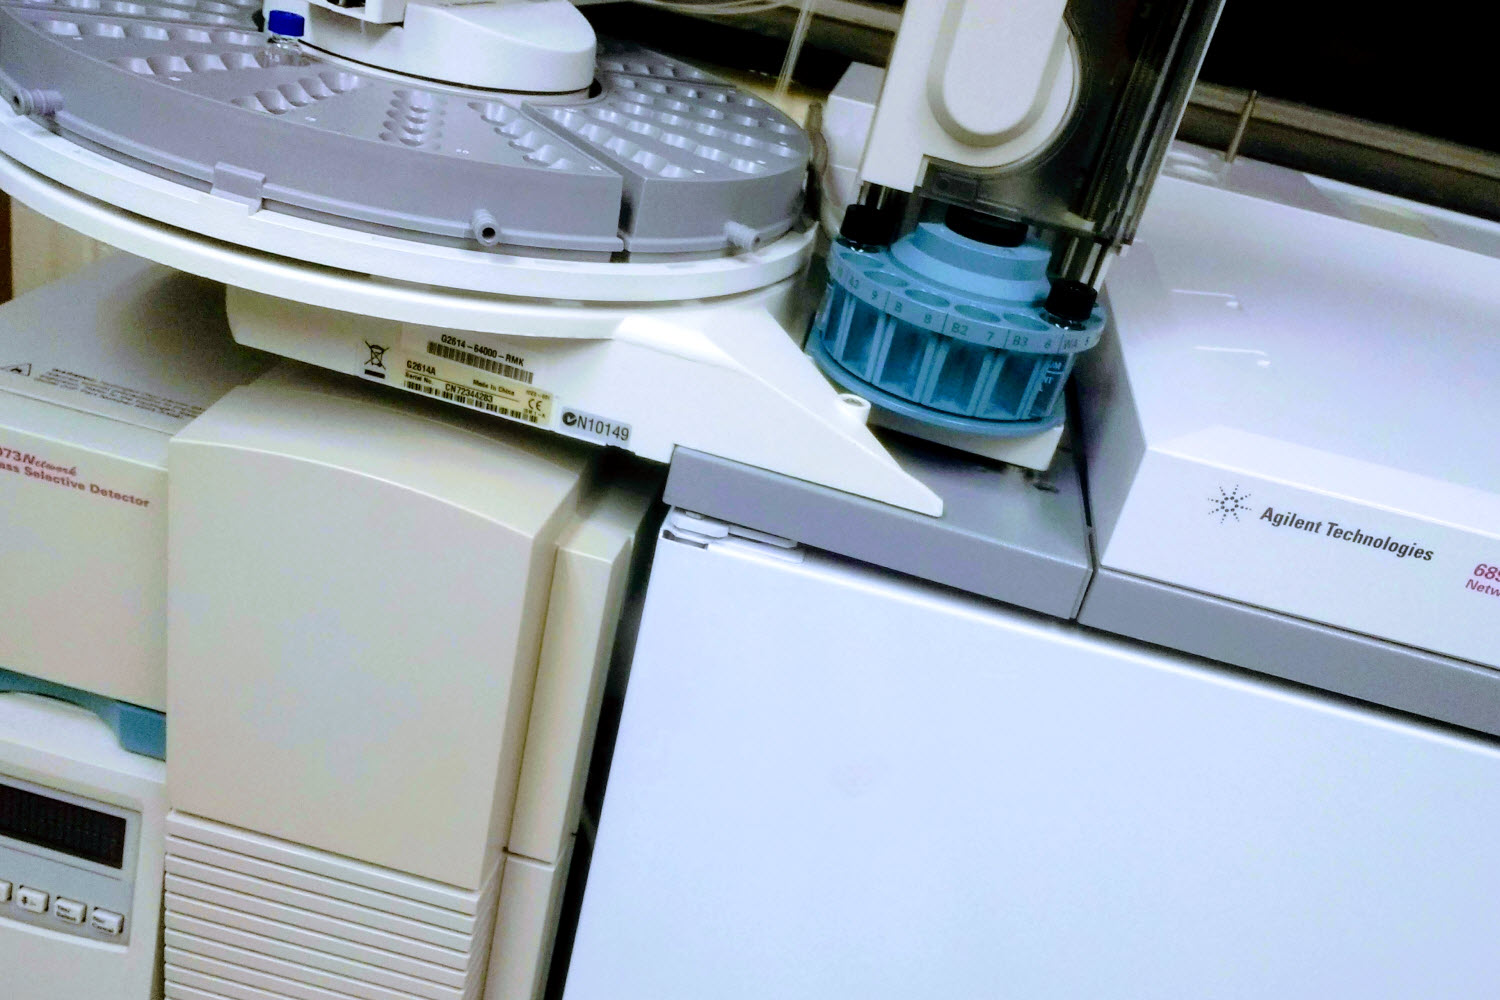 AGILENT Gas Chromatography Mass Spectrometer